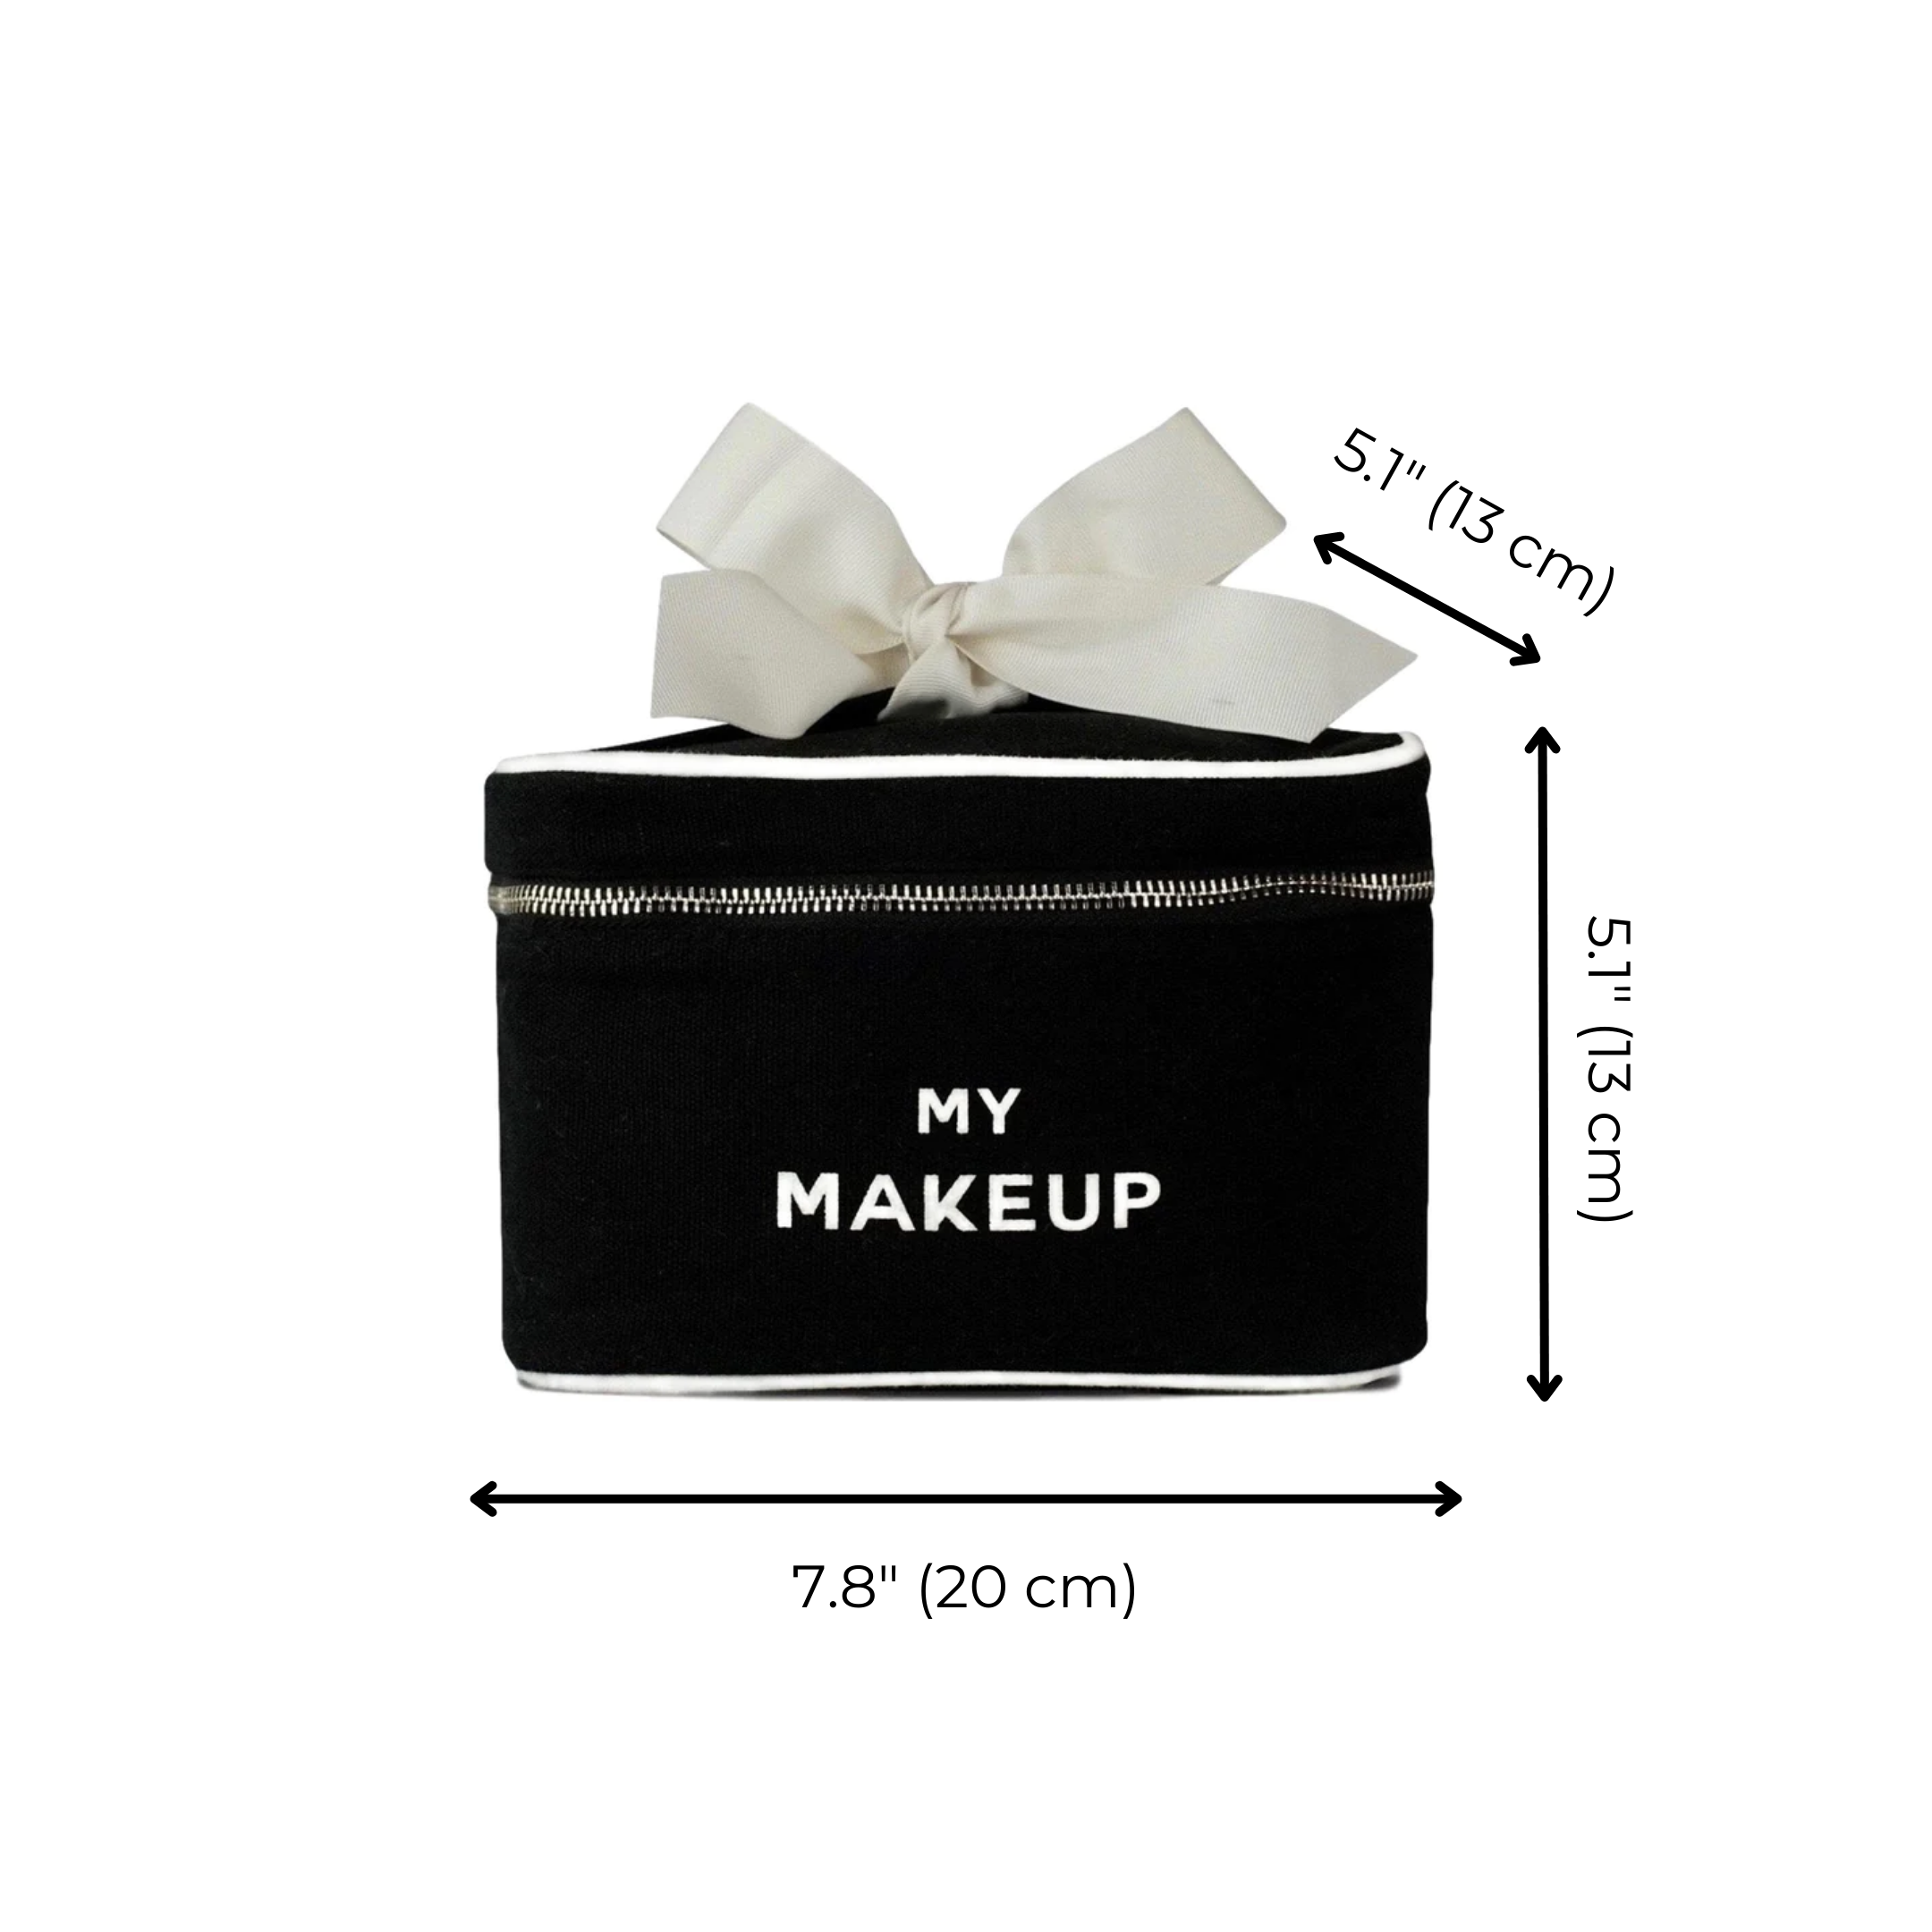 My Makeup Cosmetic Box, Black | Bag-all